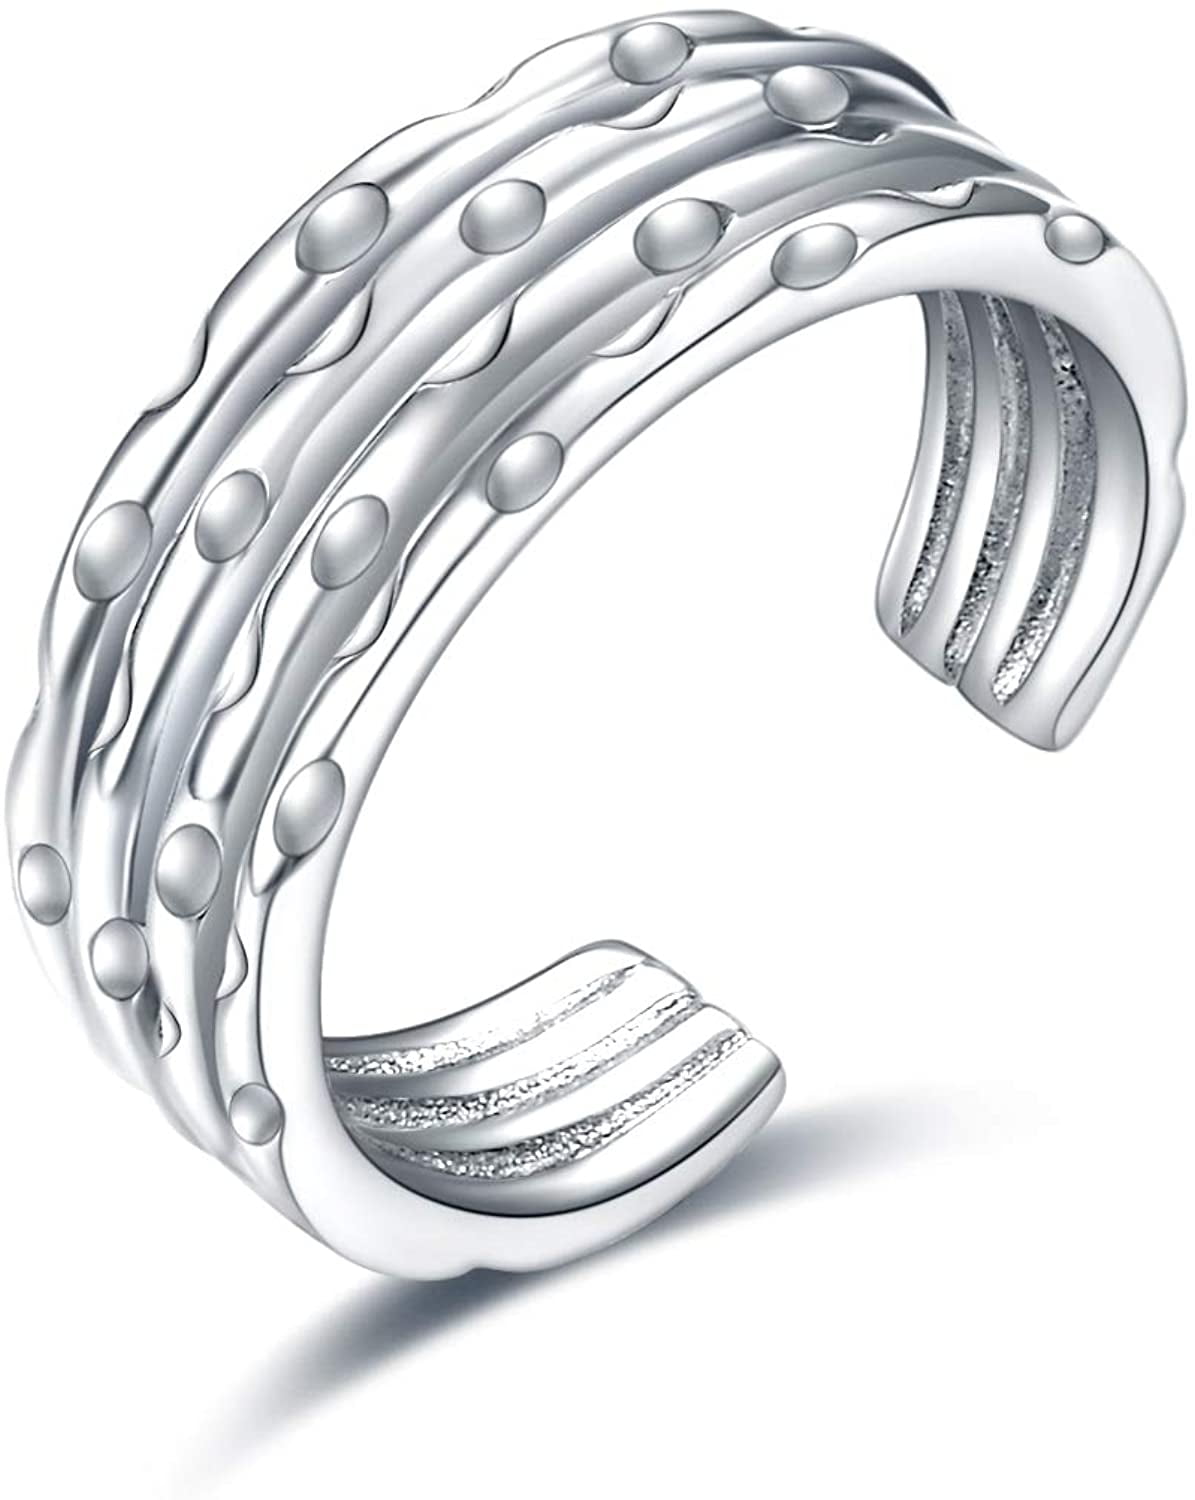 Flower Design Toe Ring Face Height 5 mm Genuine Sterling Silver 925 USA Seller 